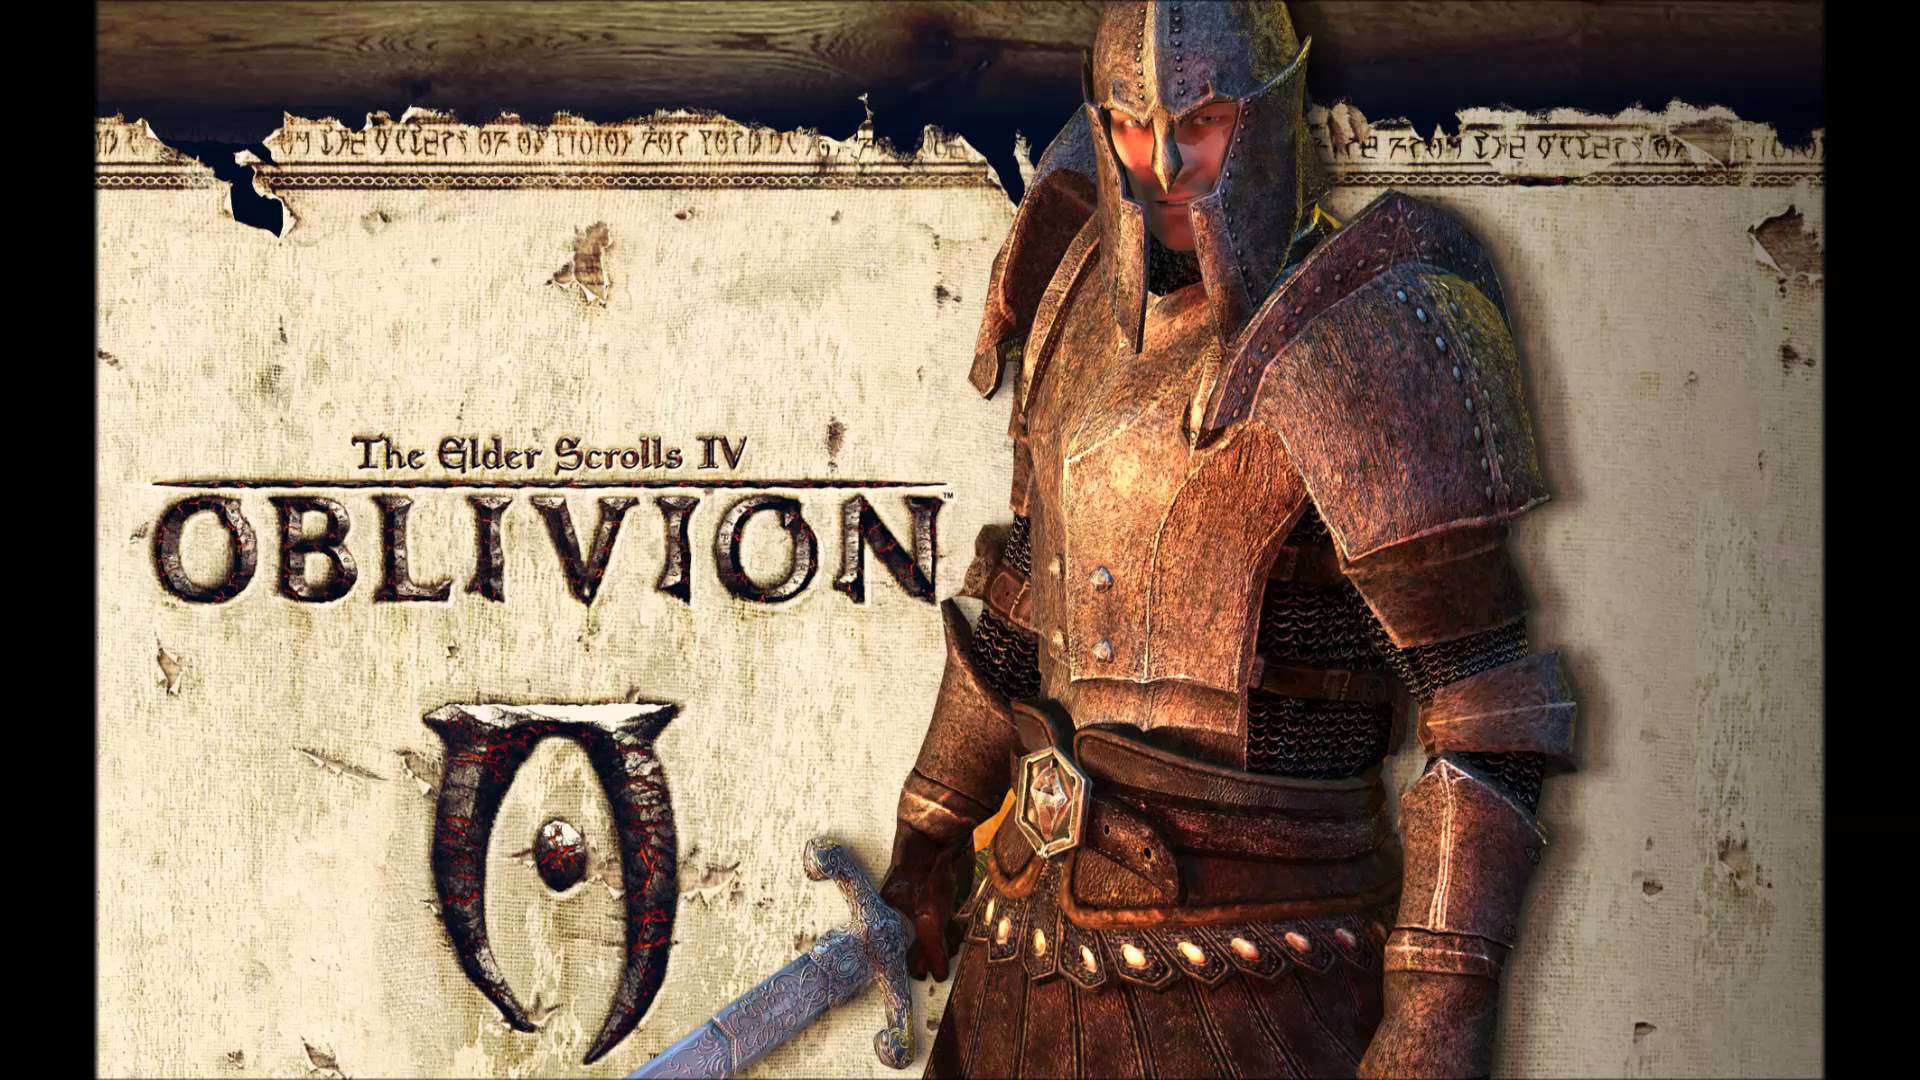 The Elder Scrolls IV Oblivion Android/iOS Mobile Version